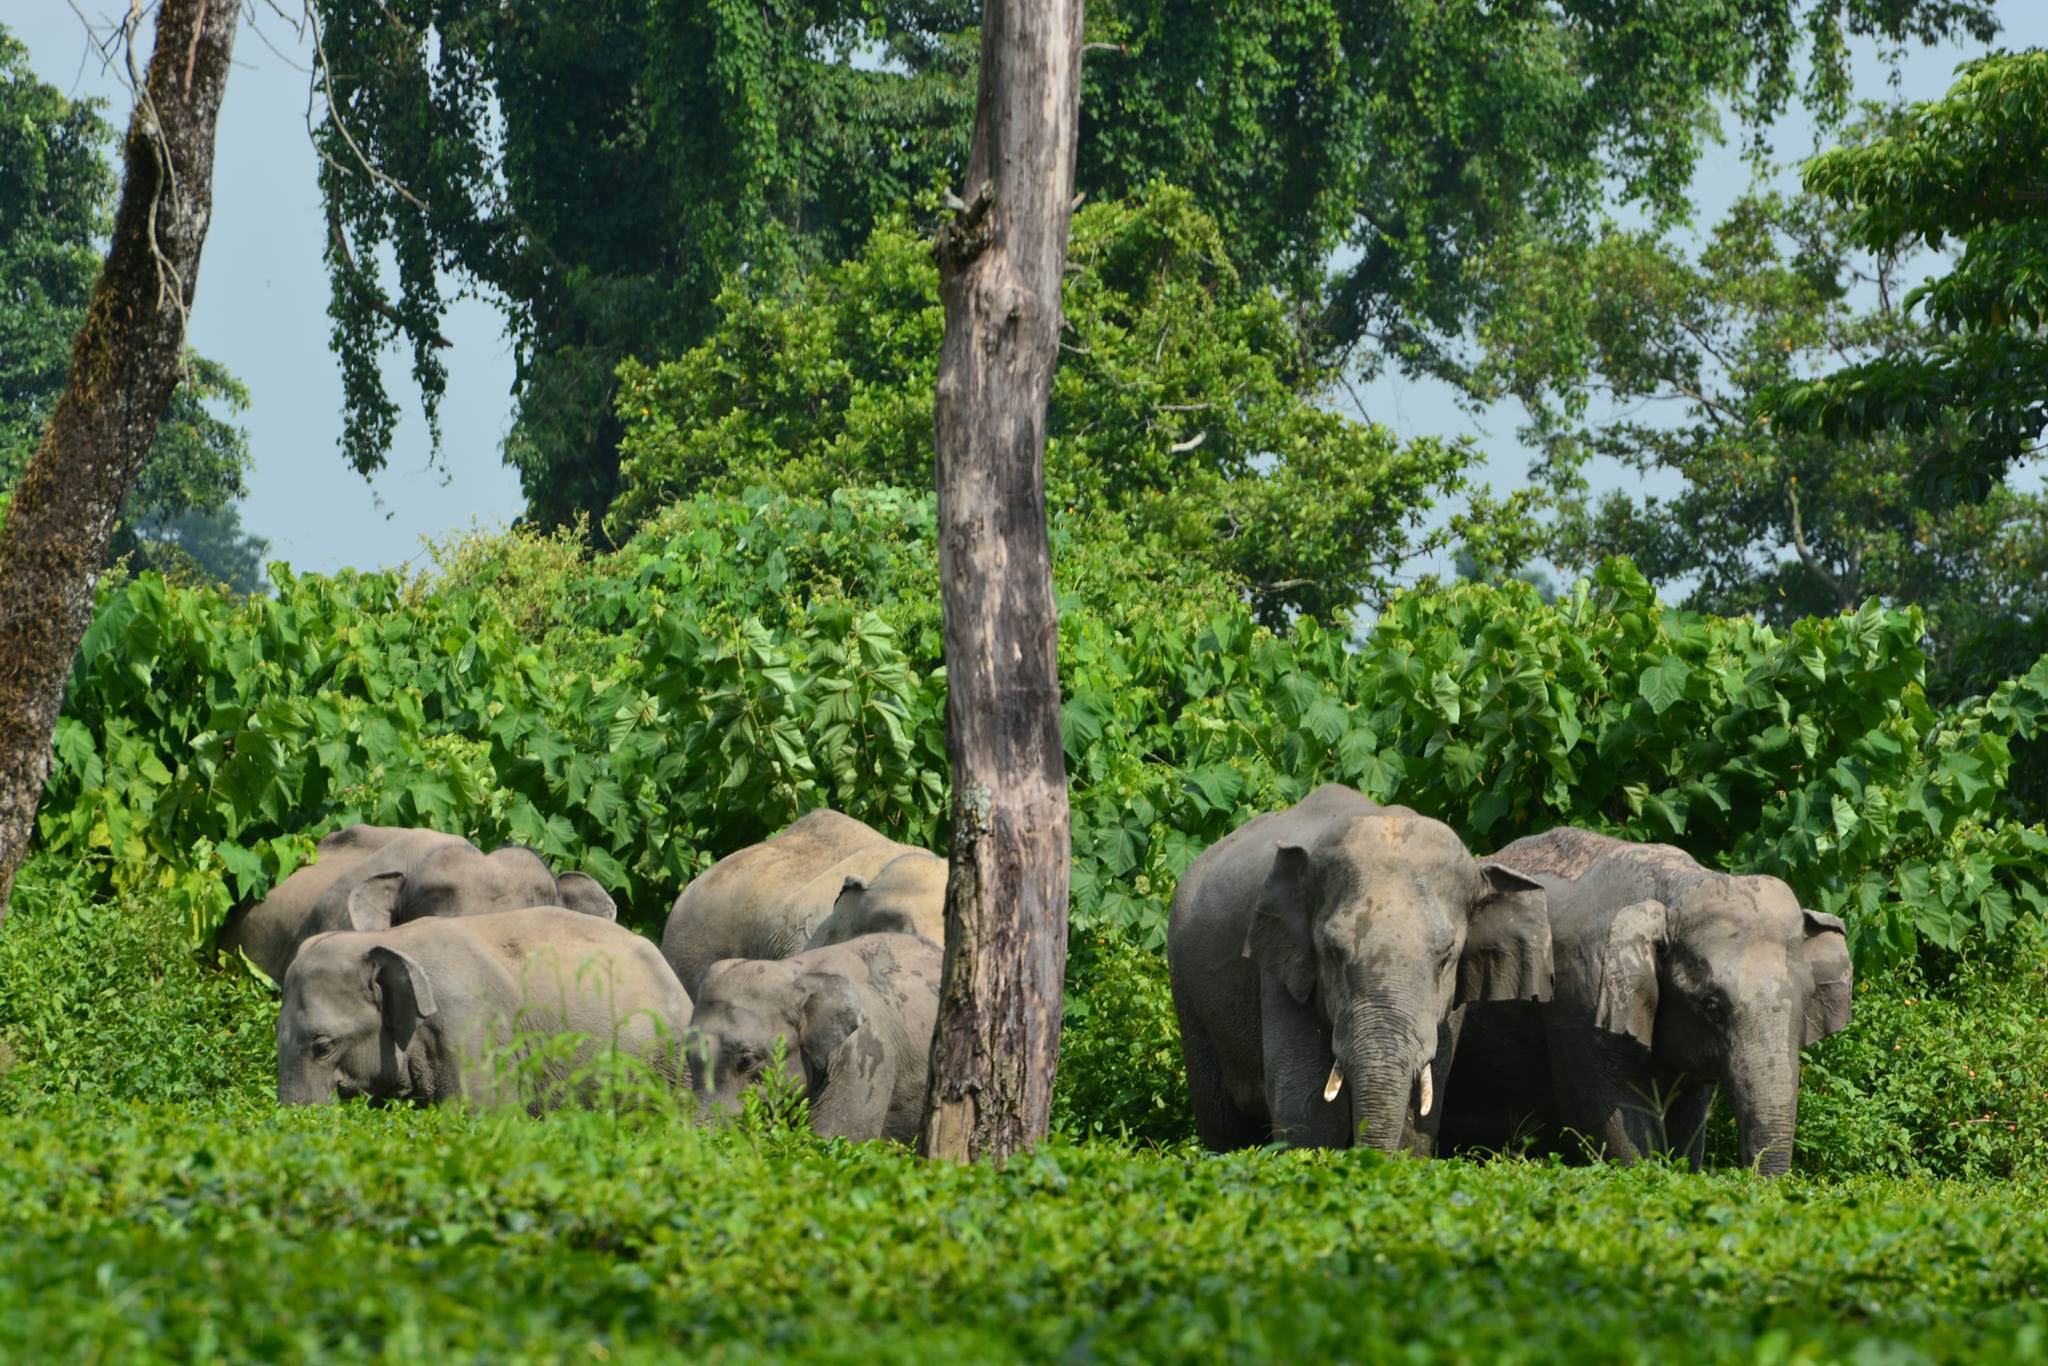 Elephants in tea garden, Assam, India. Credit: Jayanta Kumar Das